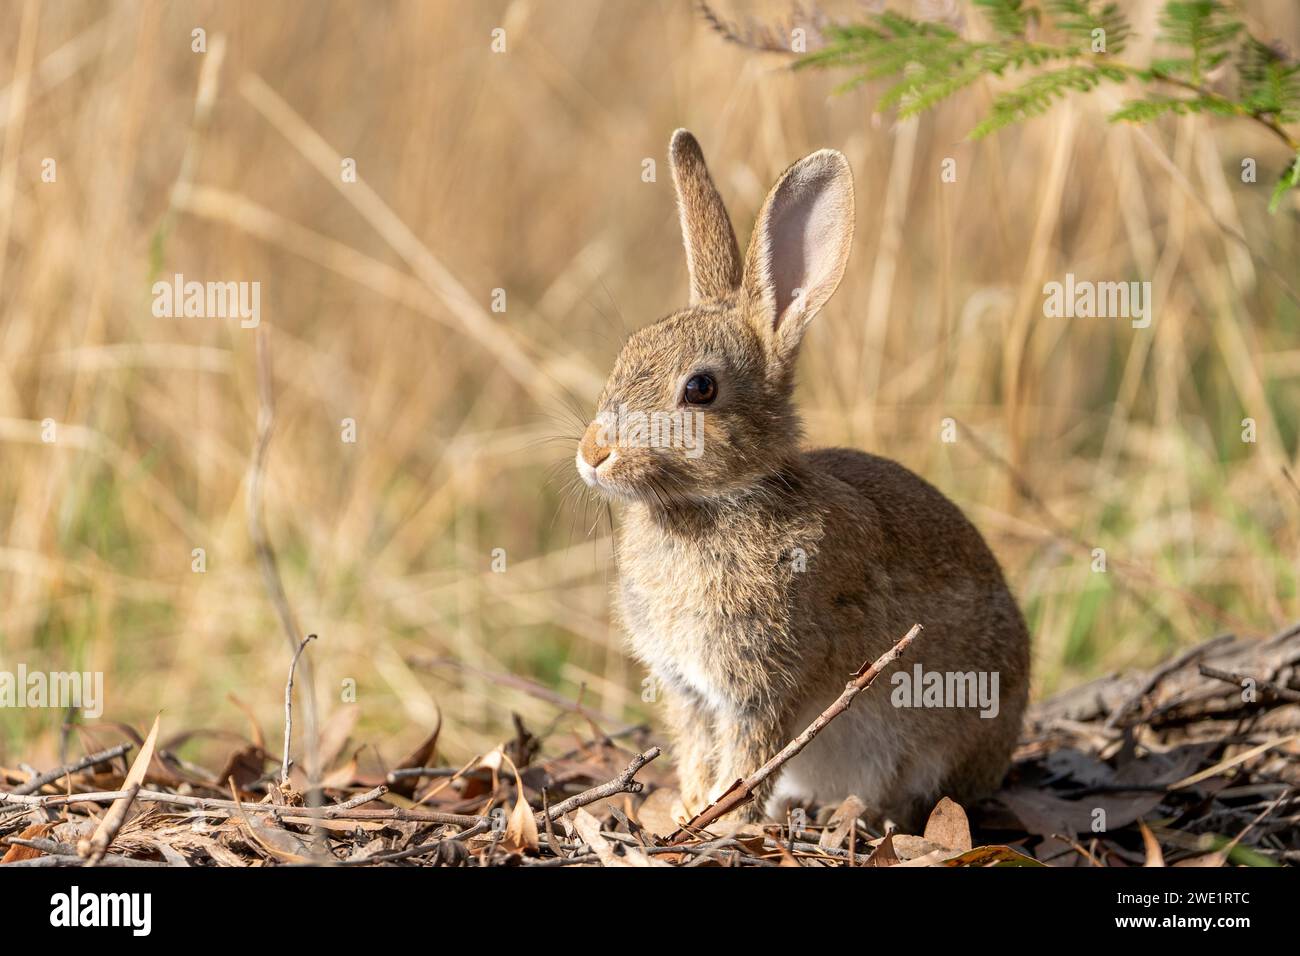 Cute wild rabbit sitting in dry grass Australia Stock Photo